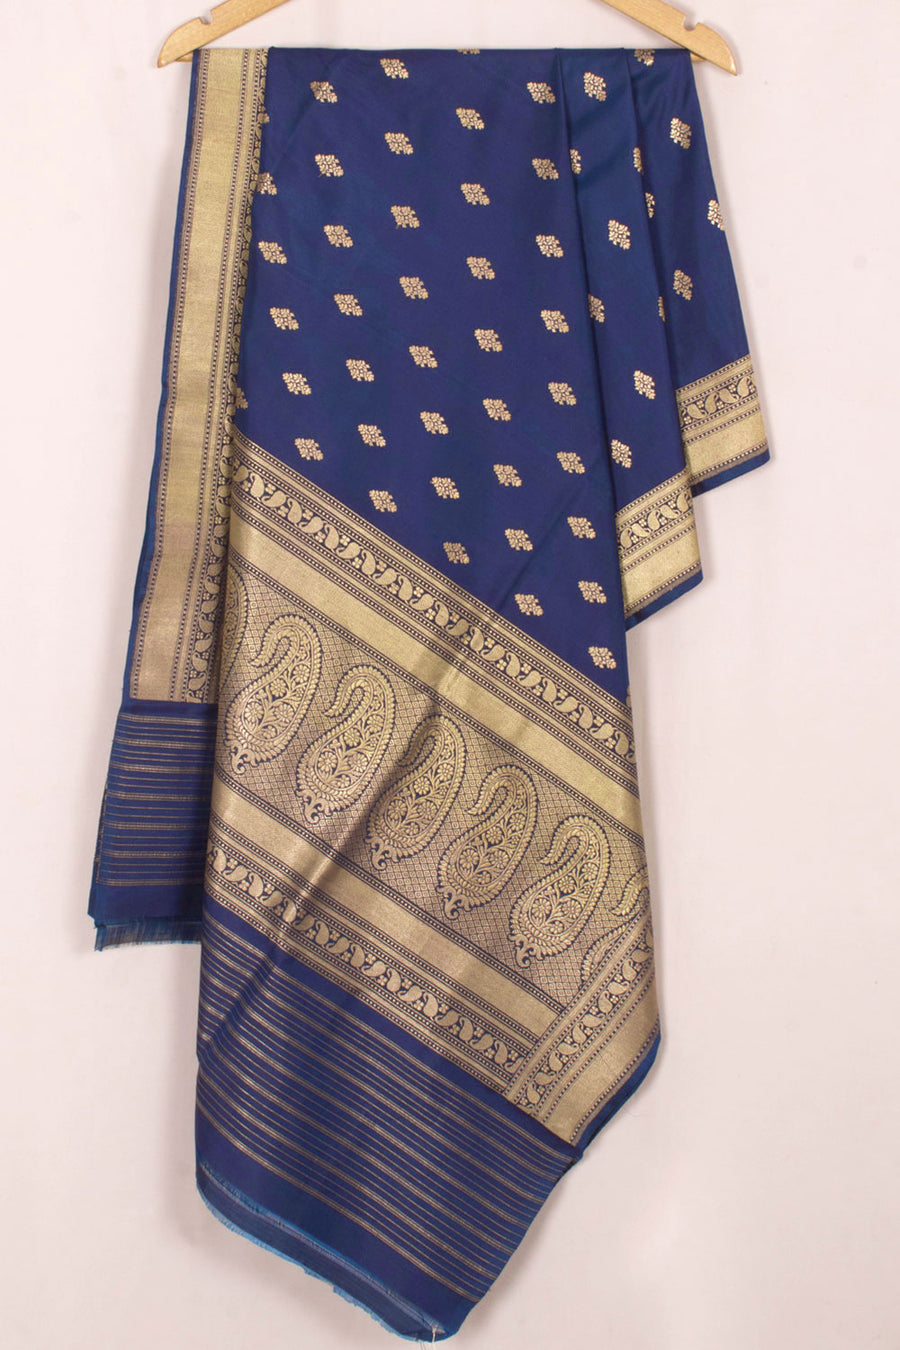 Handloom Banarasi Kadhwa Katan Silk Dupatta with Floral Butis and Kairi Konia Design